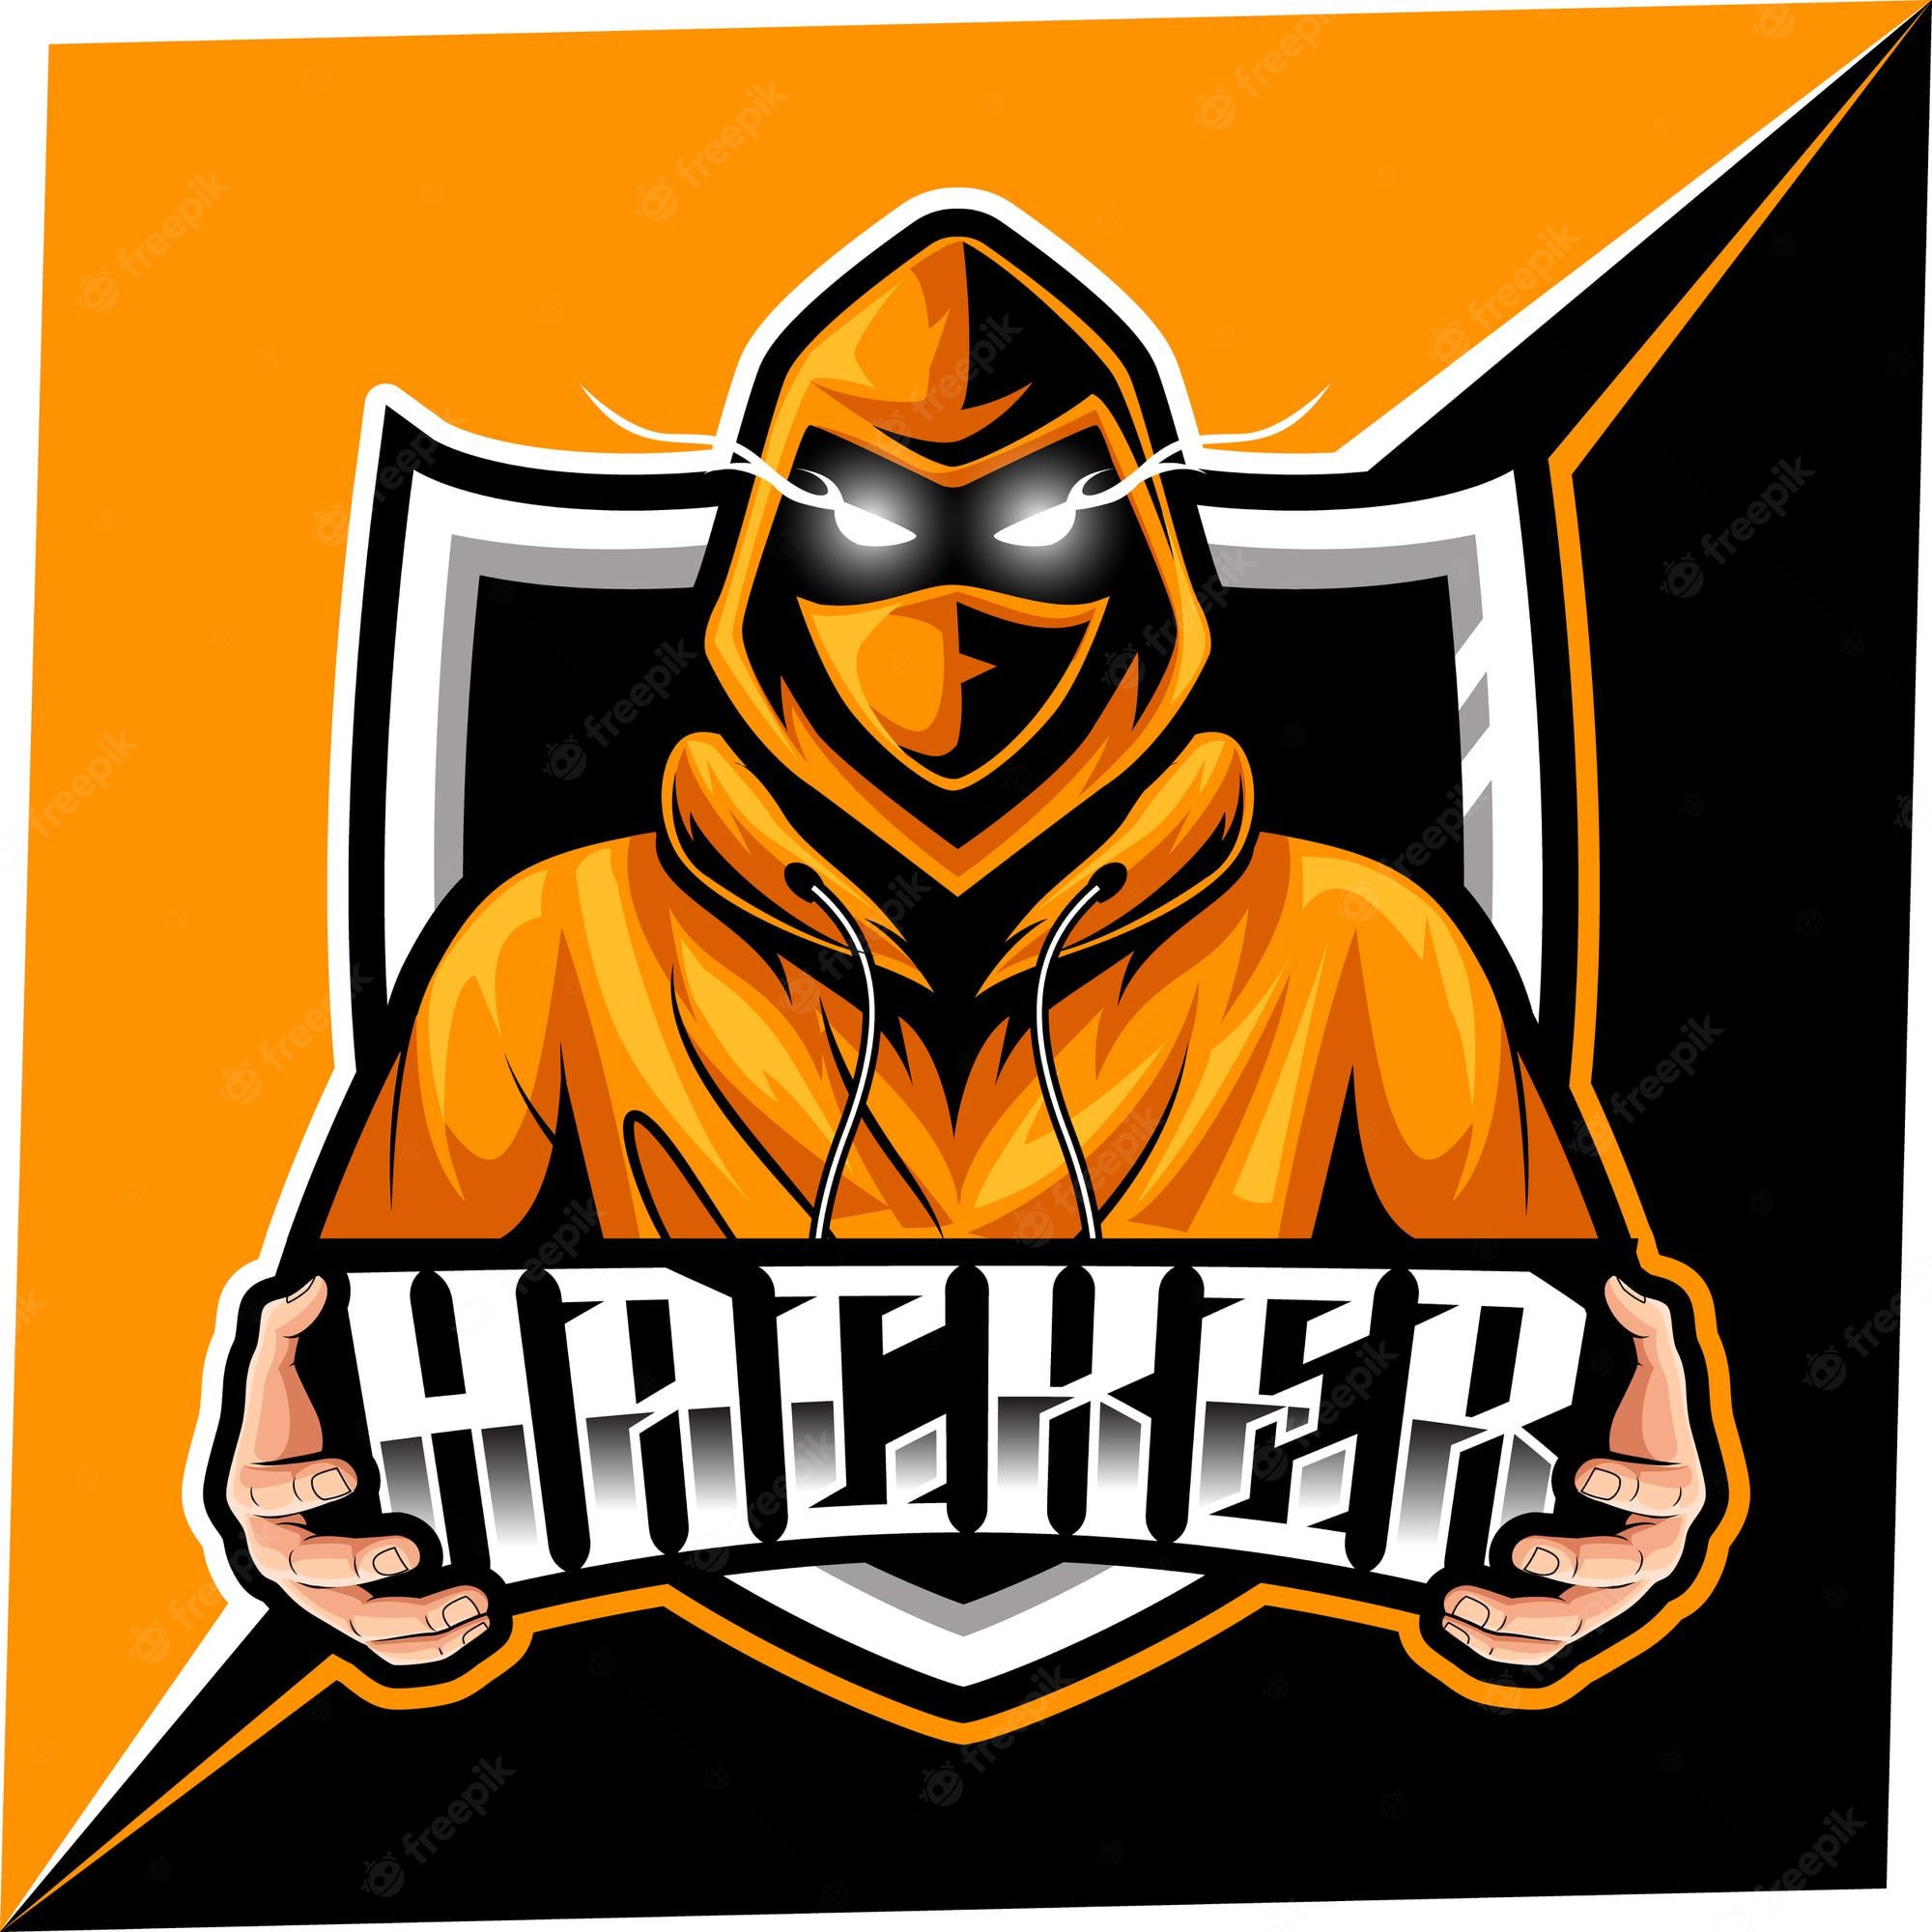 Hacker logo Image. Free Vectors, & PSD